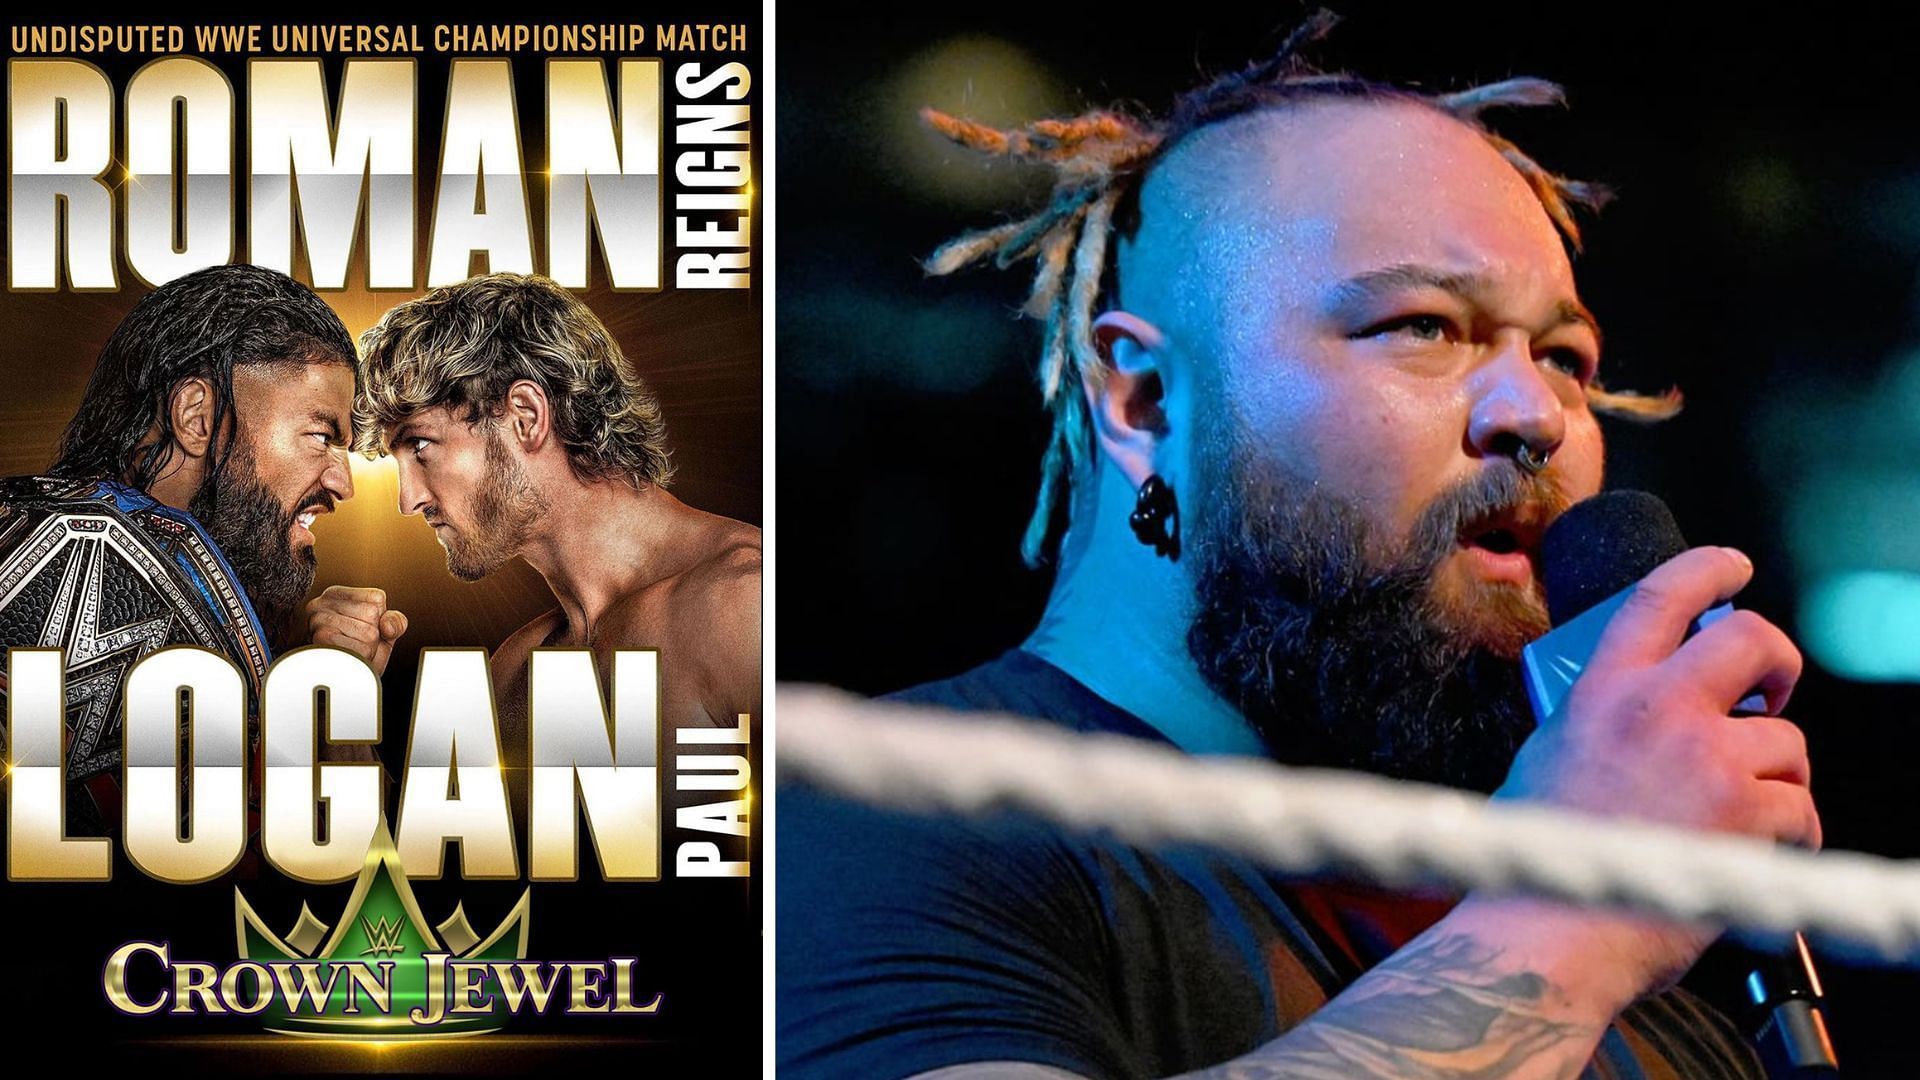 WWE Crown Jewel airs live from Saudi Arabia this Saturday